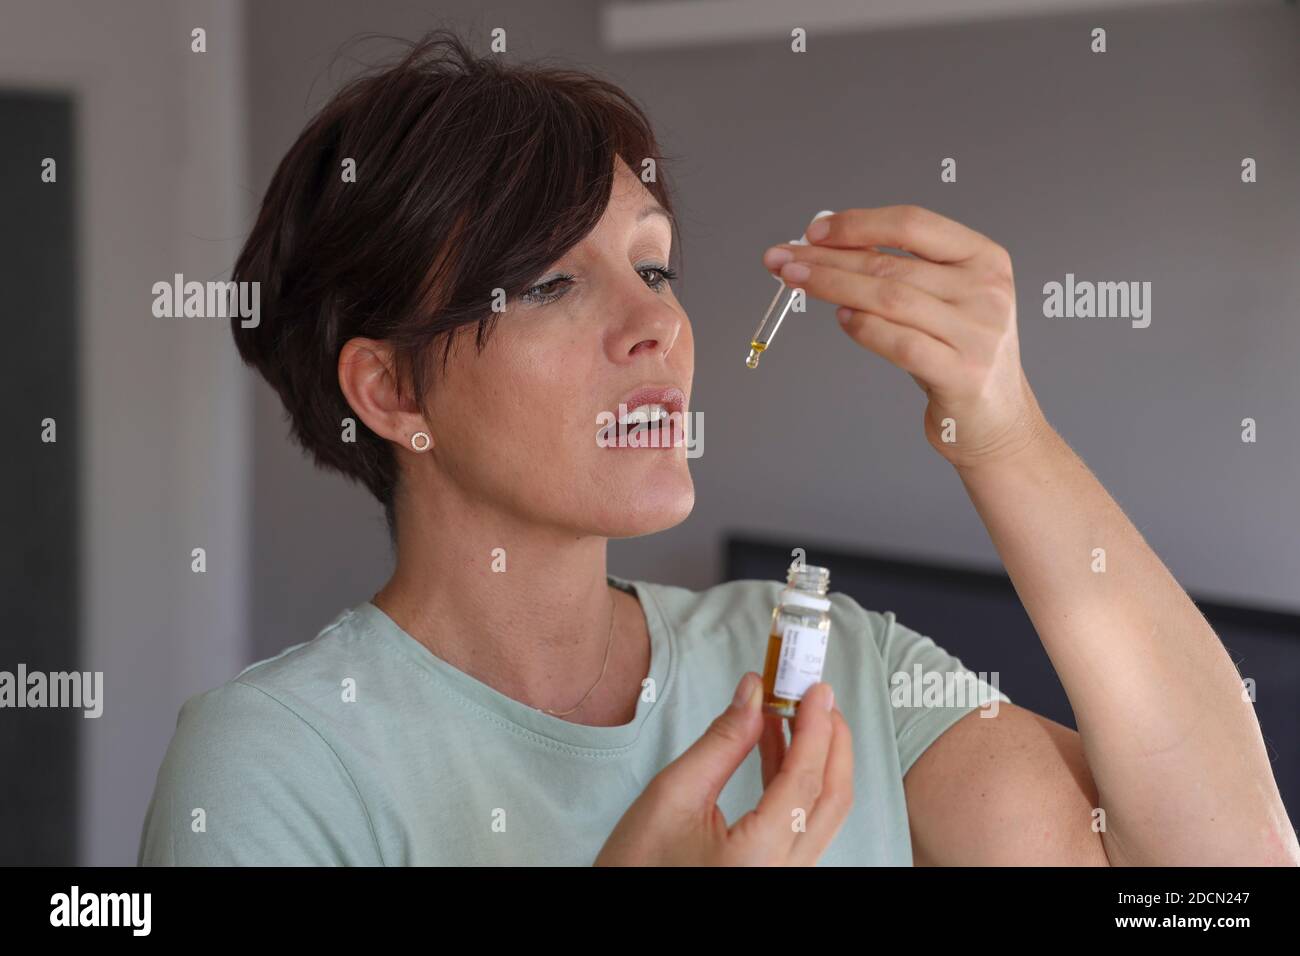 Woman using CBD oil Stock Photo